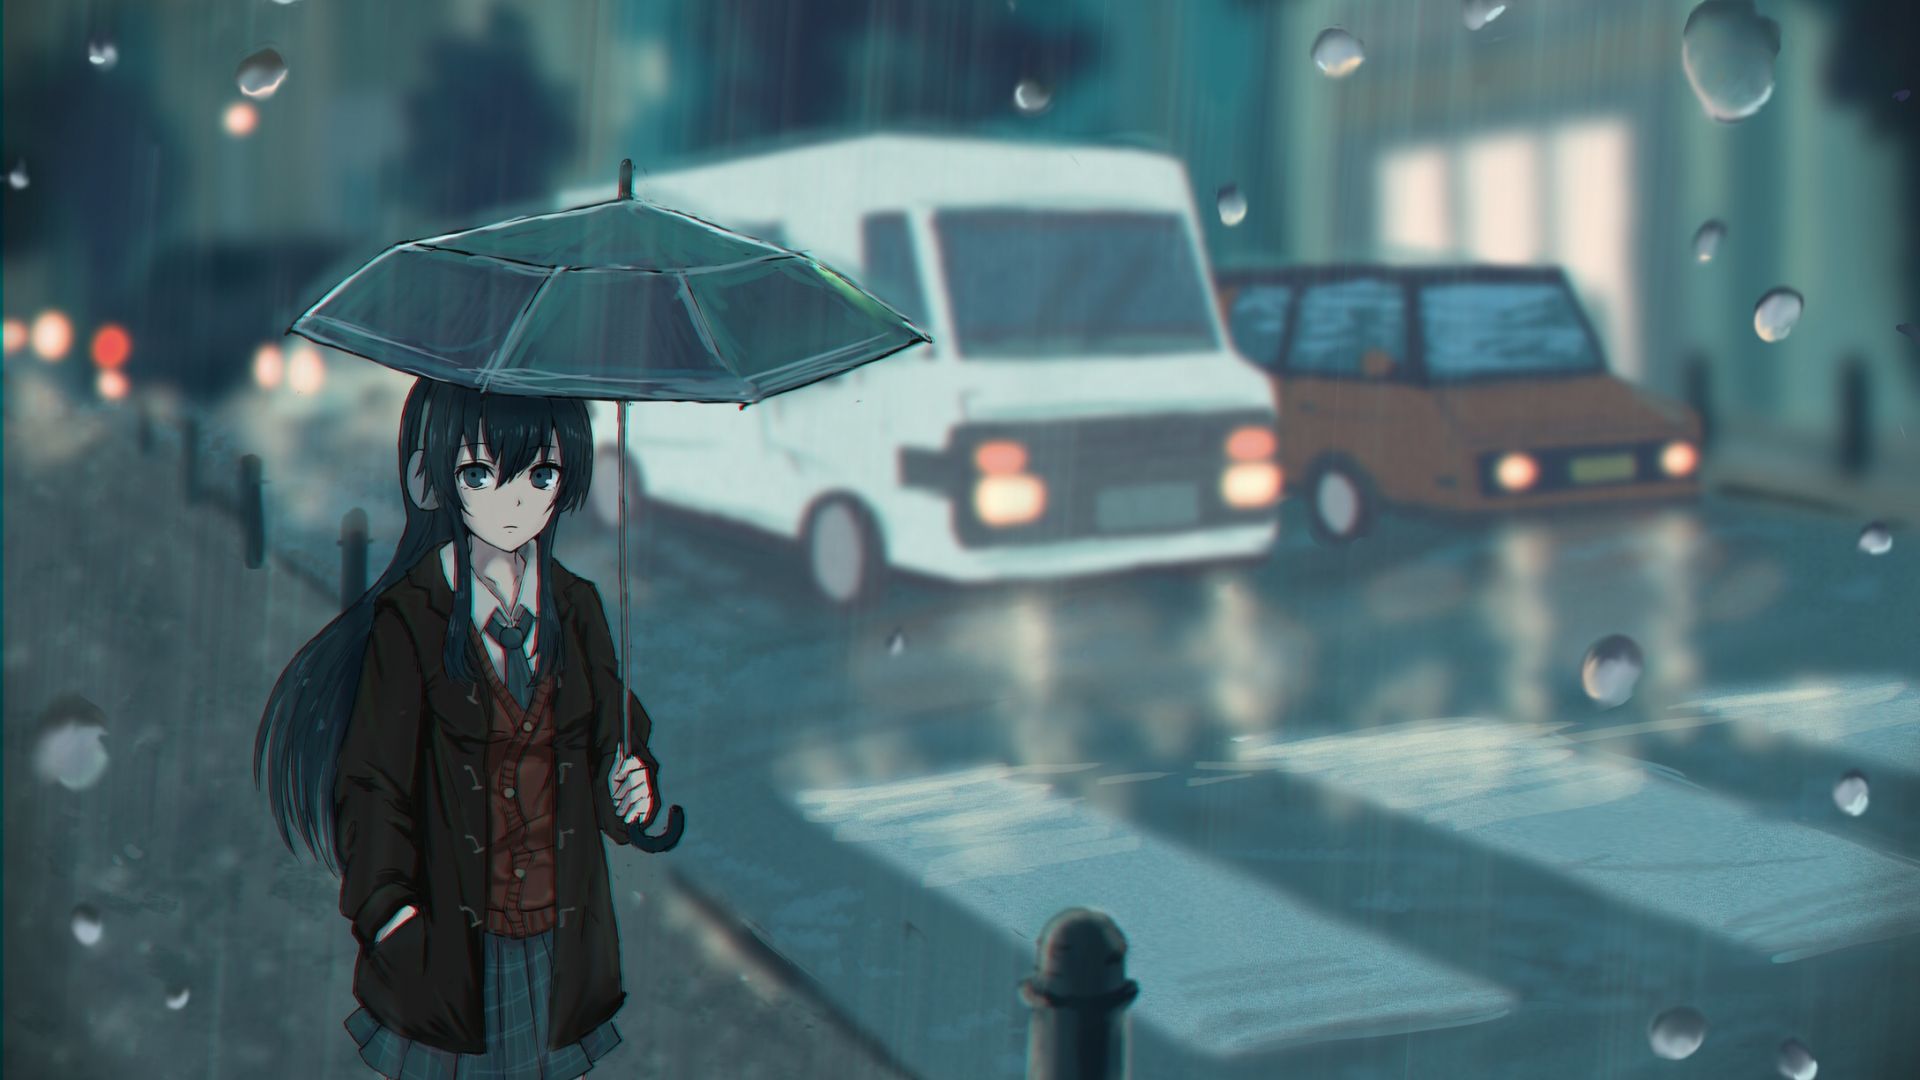 Desktop Wallpaper Walk, Anime Girl, Rain, Umbrella, Street, Hd Image,  Picture, Background, 9b6fdd